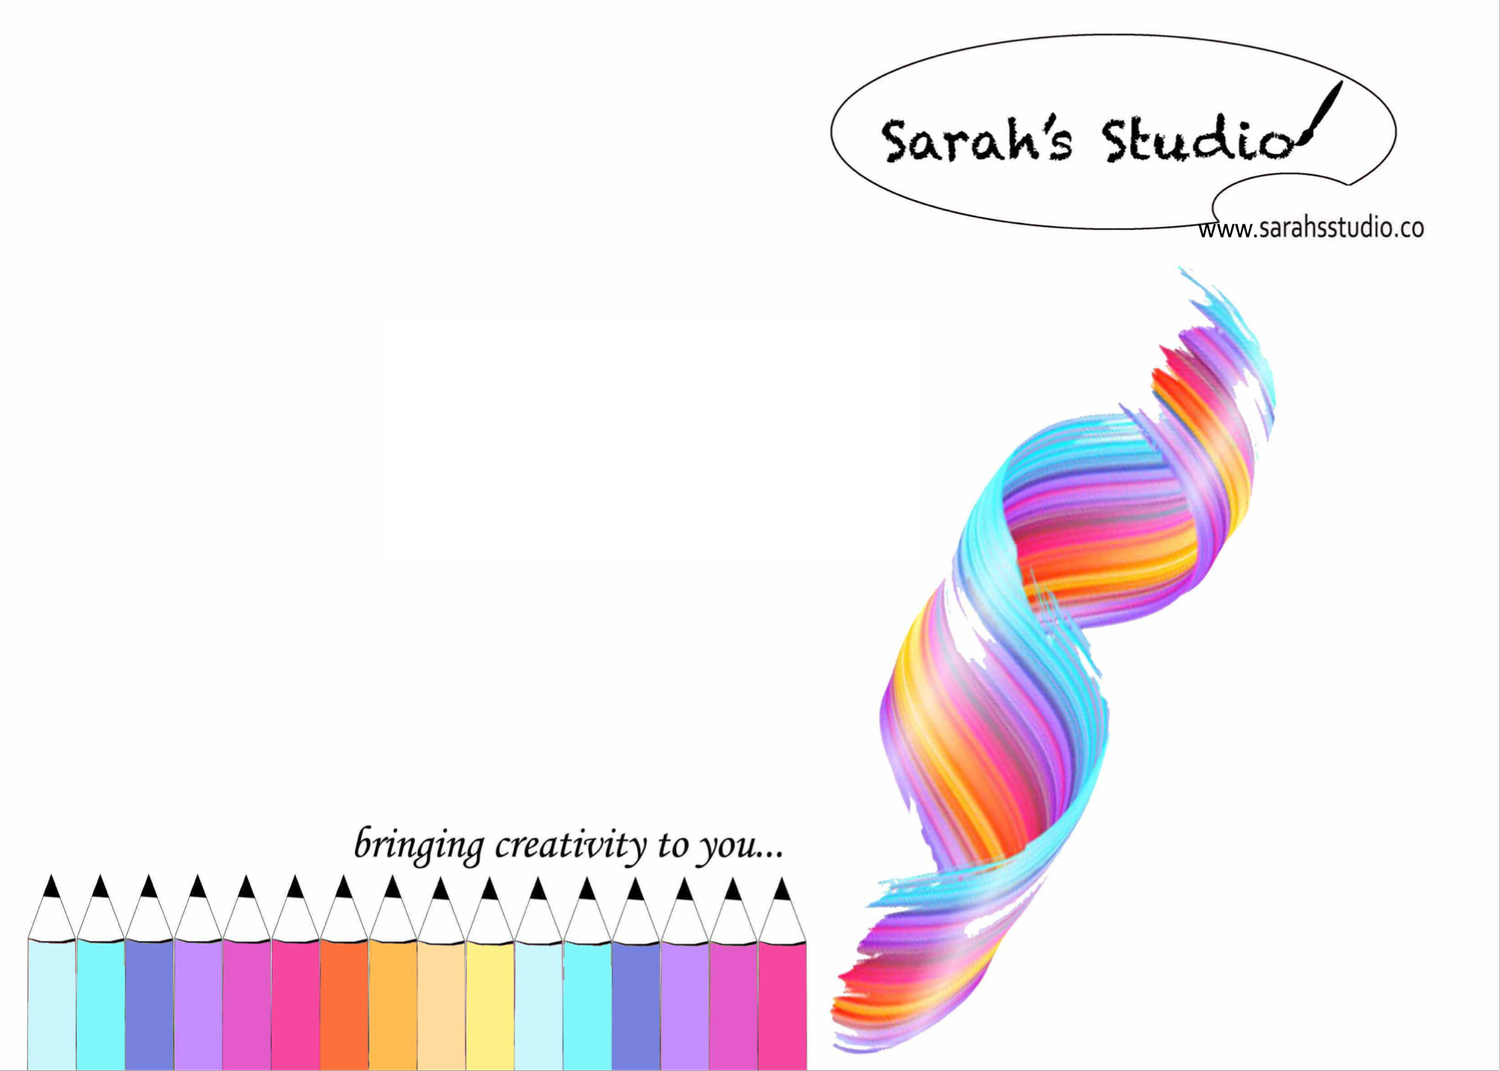 Sarah's Studio